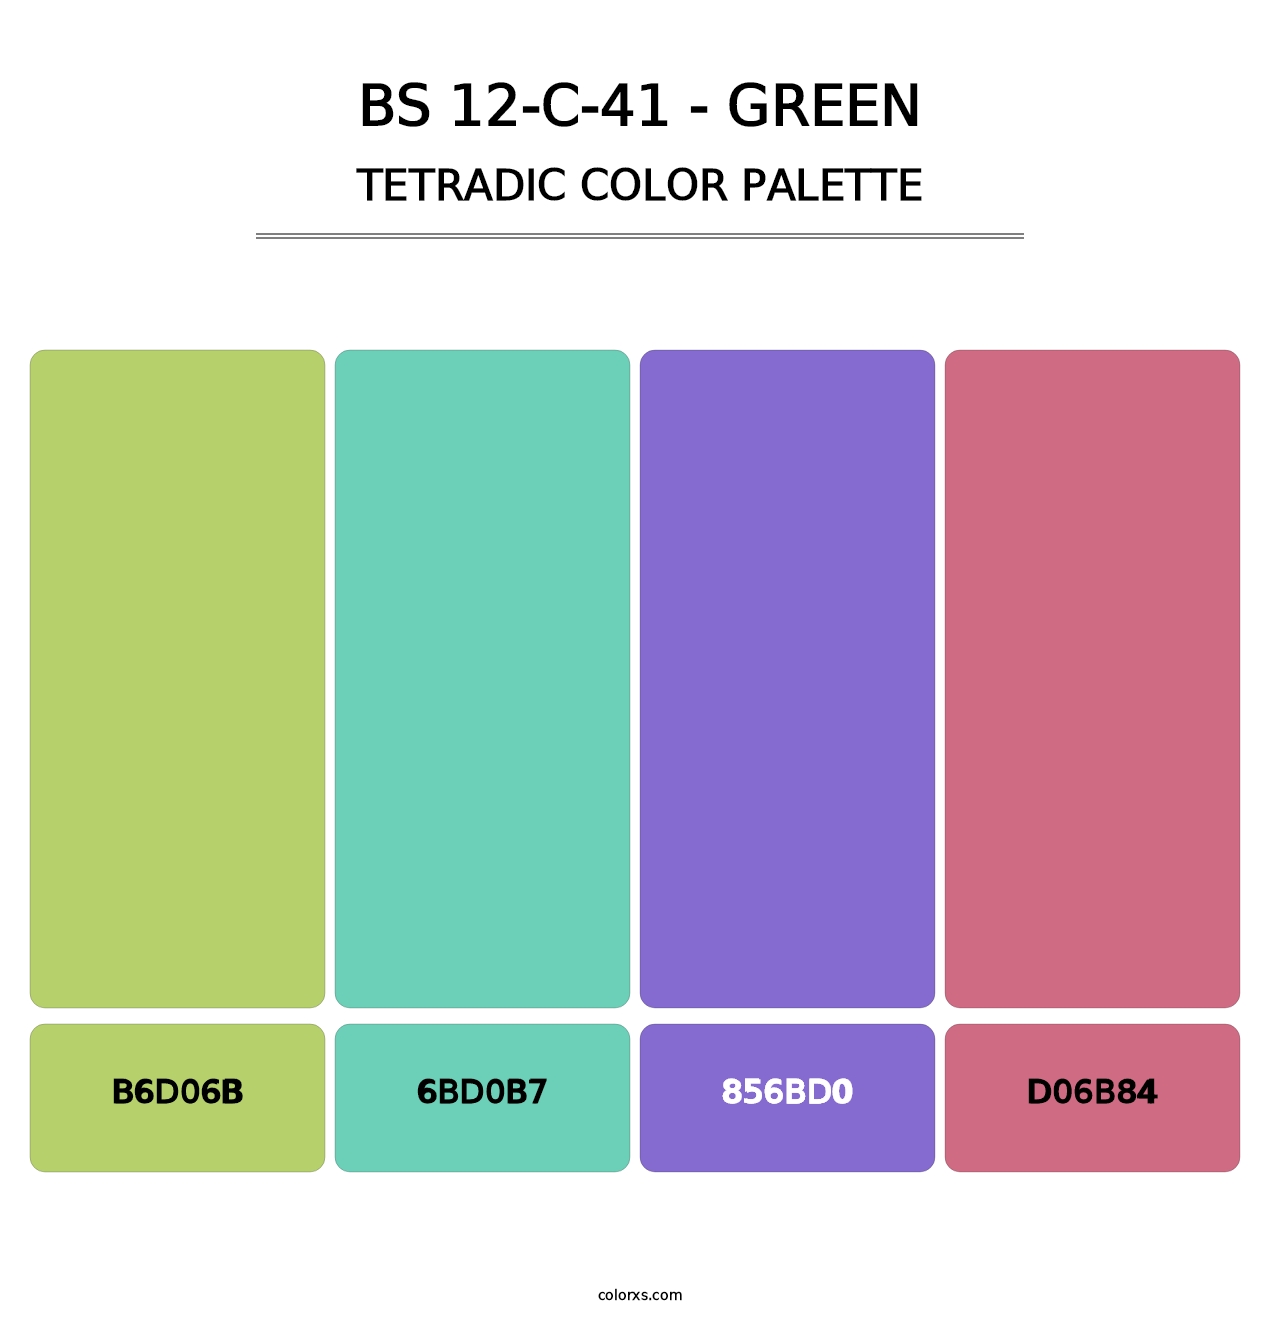 BS 12-C-41 - Green - Tetradic Color Palette